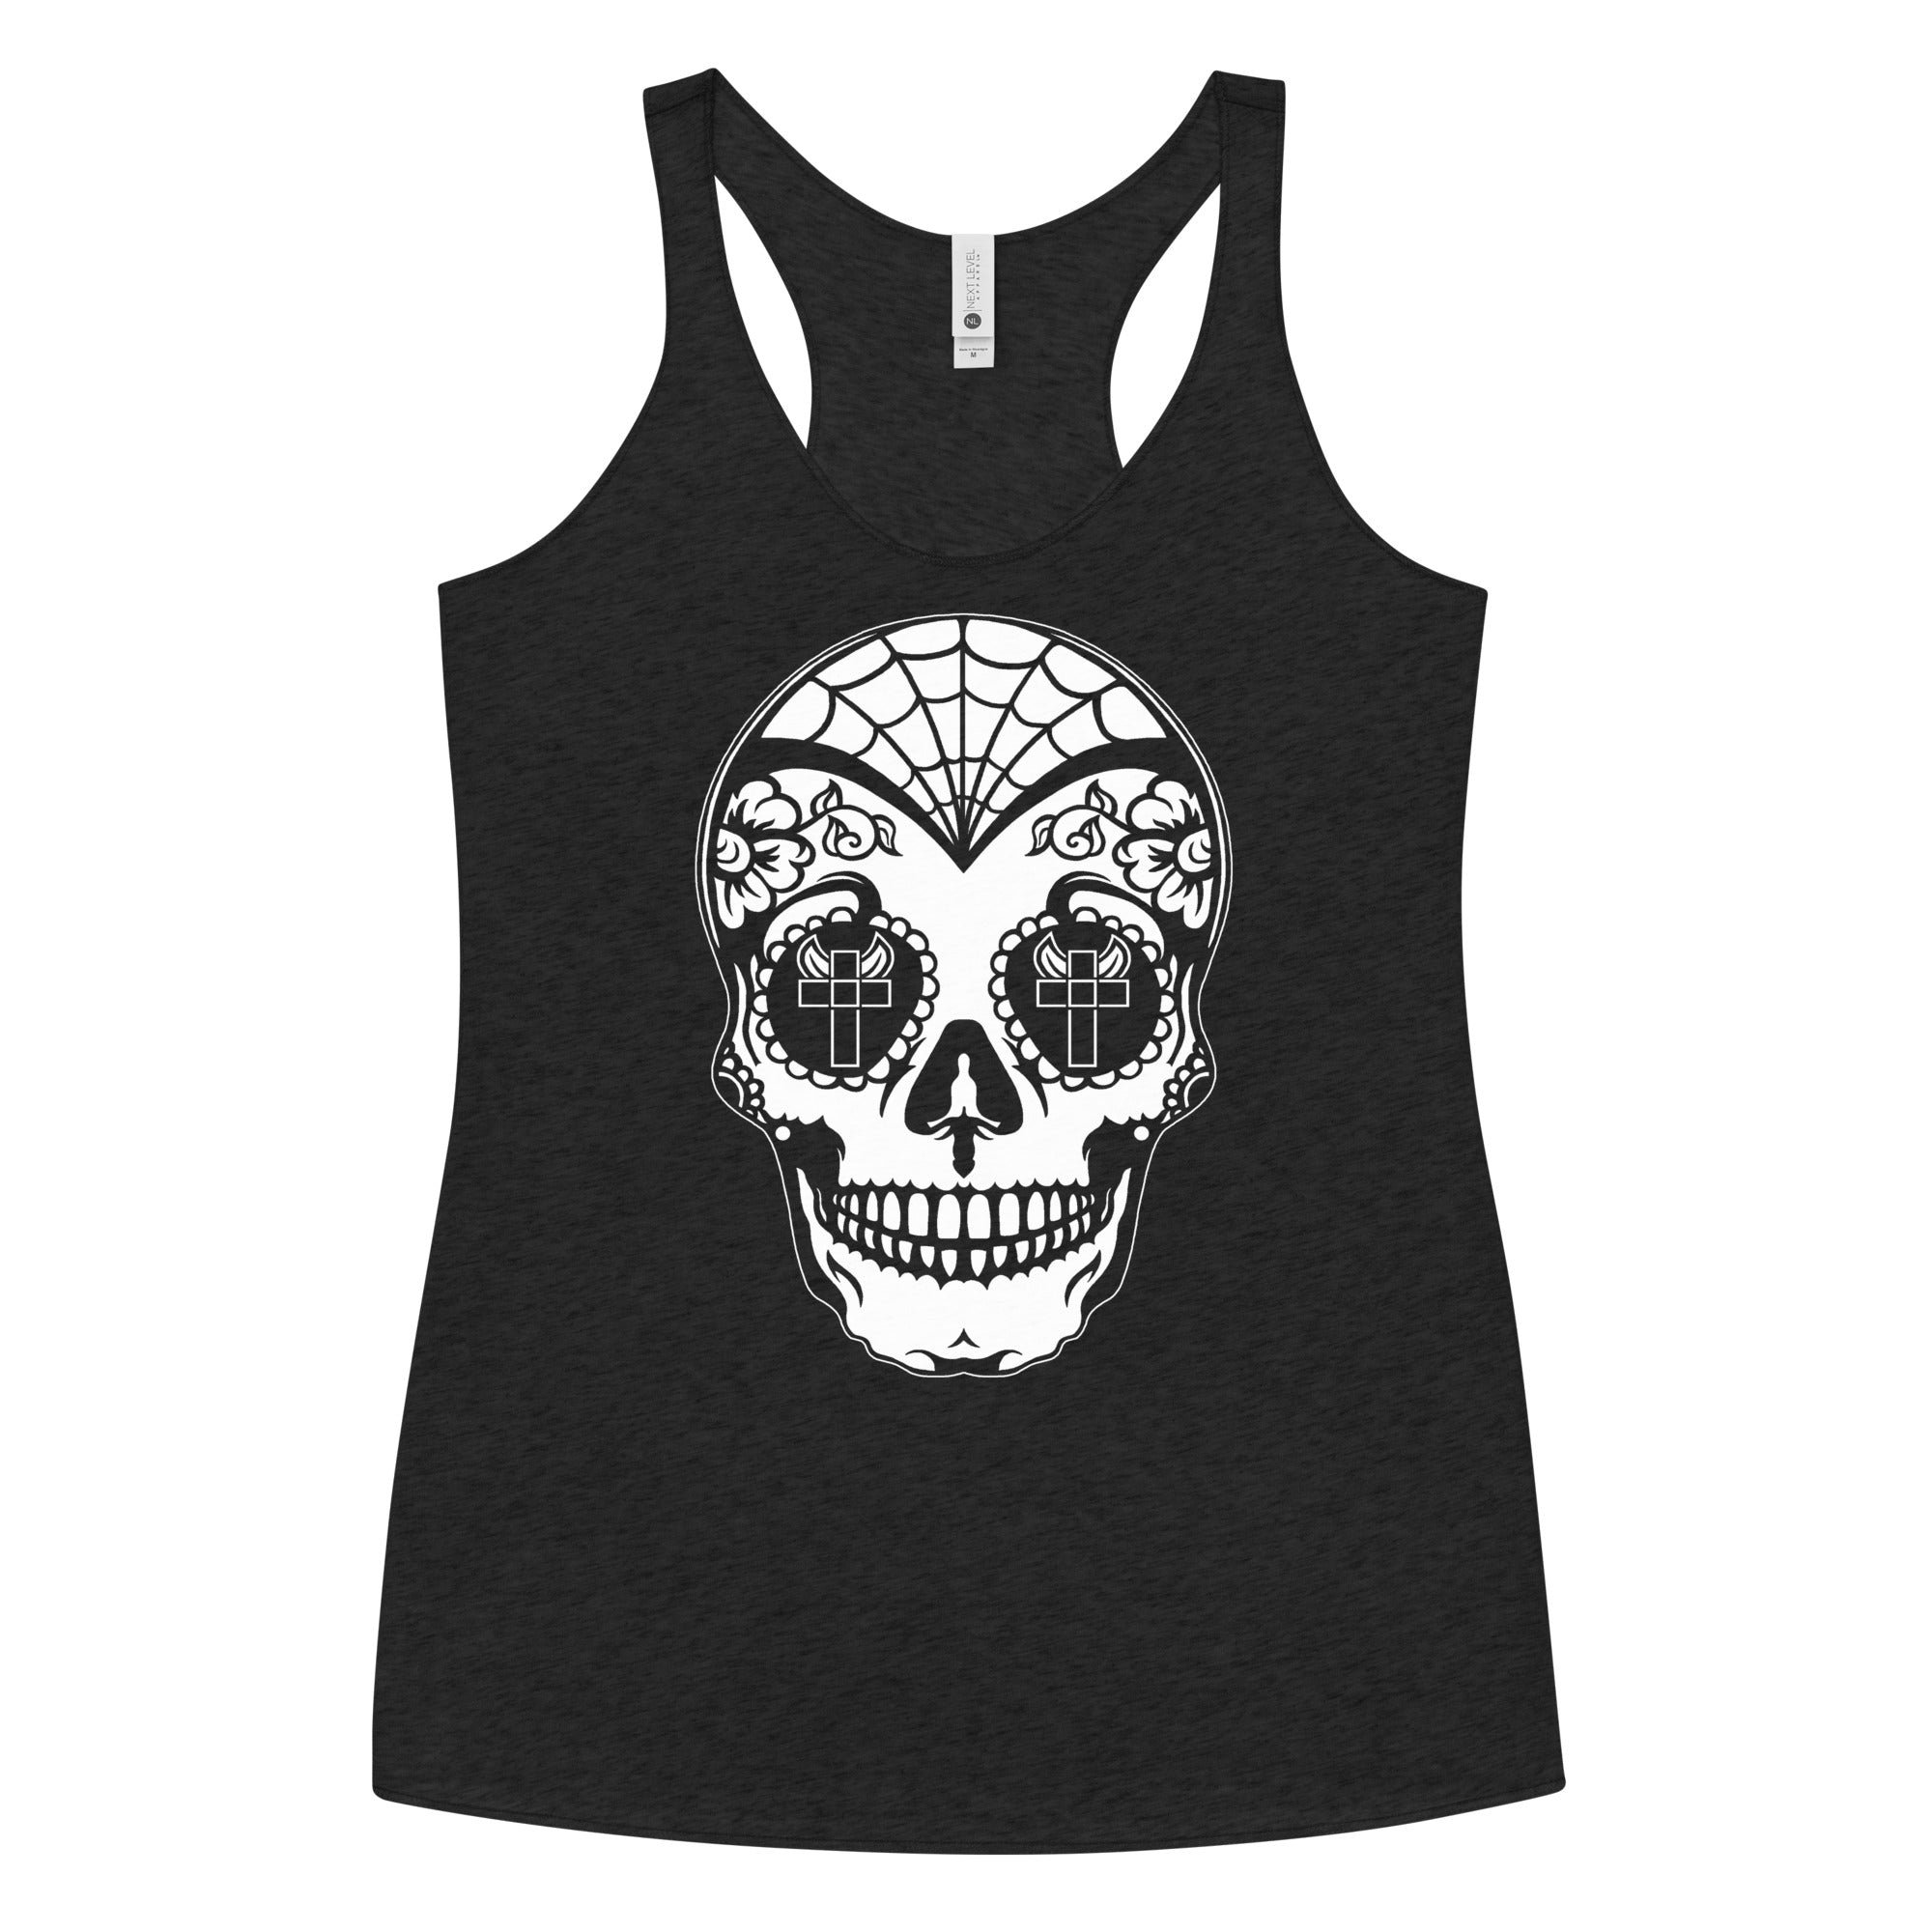 White Sugar Skull Day of the Dead Halloween Women's Racerback Tank Top Shirt - Edge of Life Designs